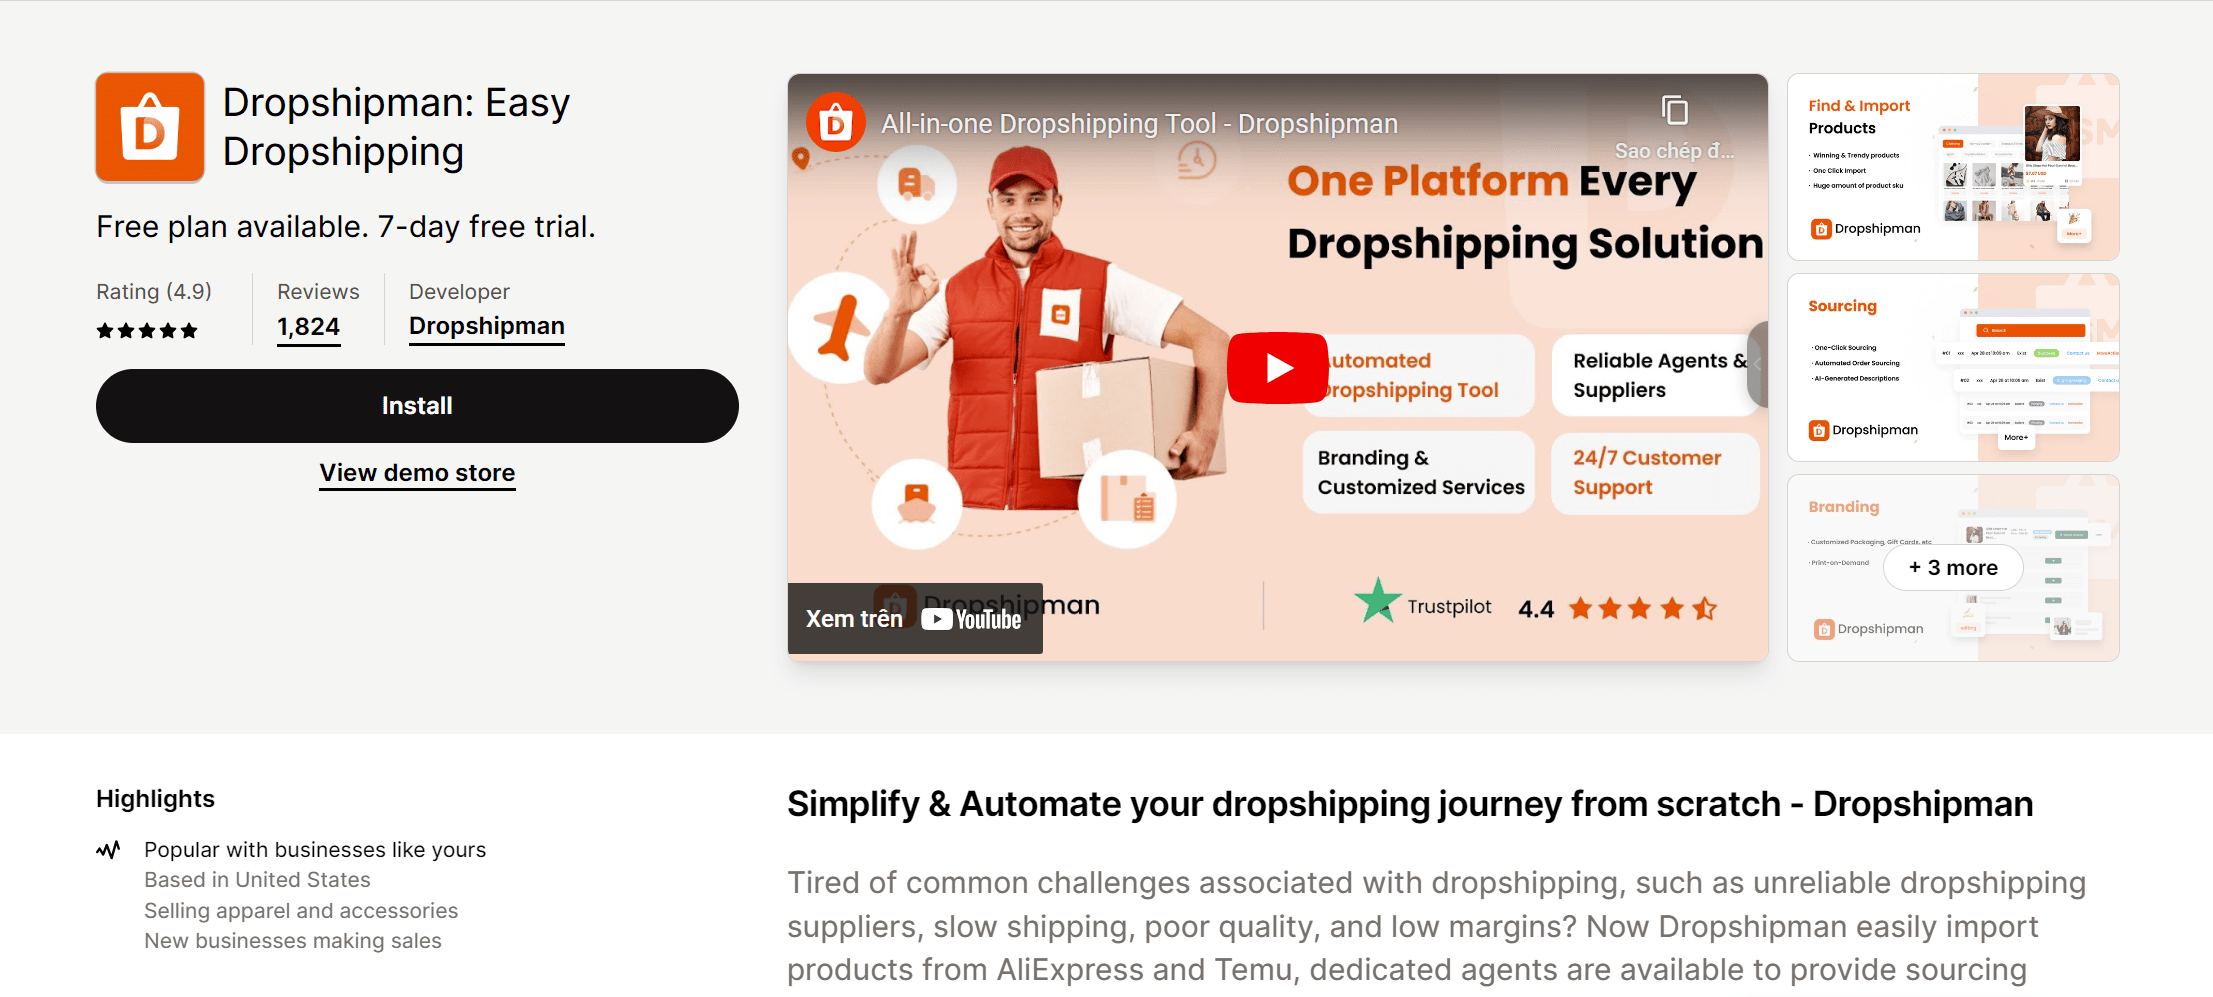 Dropshipman - Easy Dropshipping